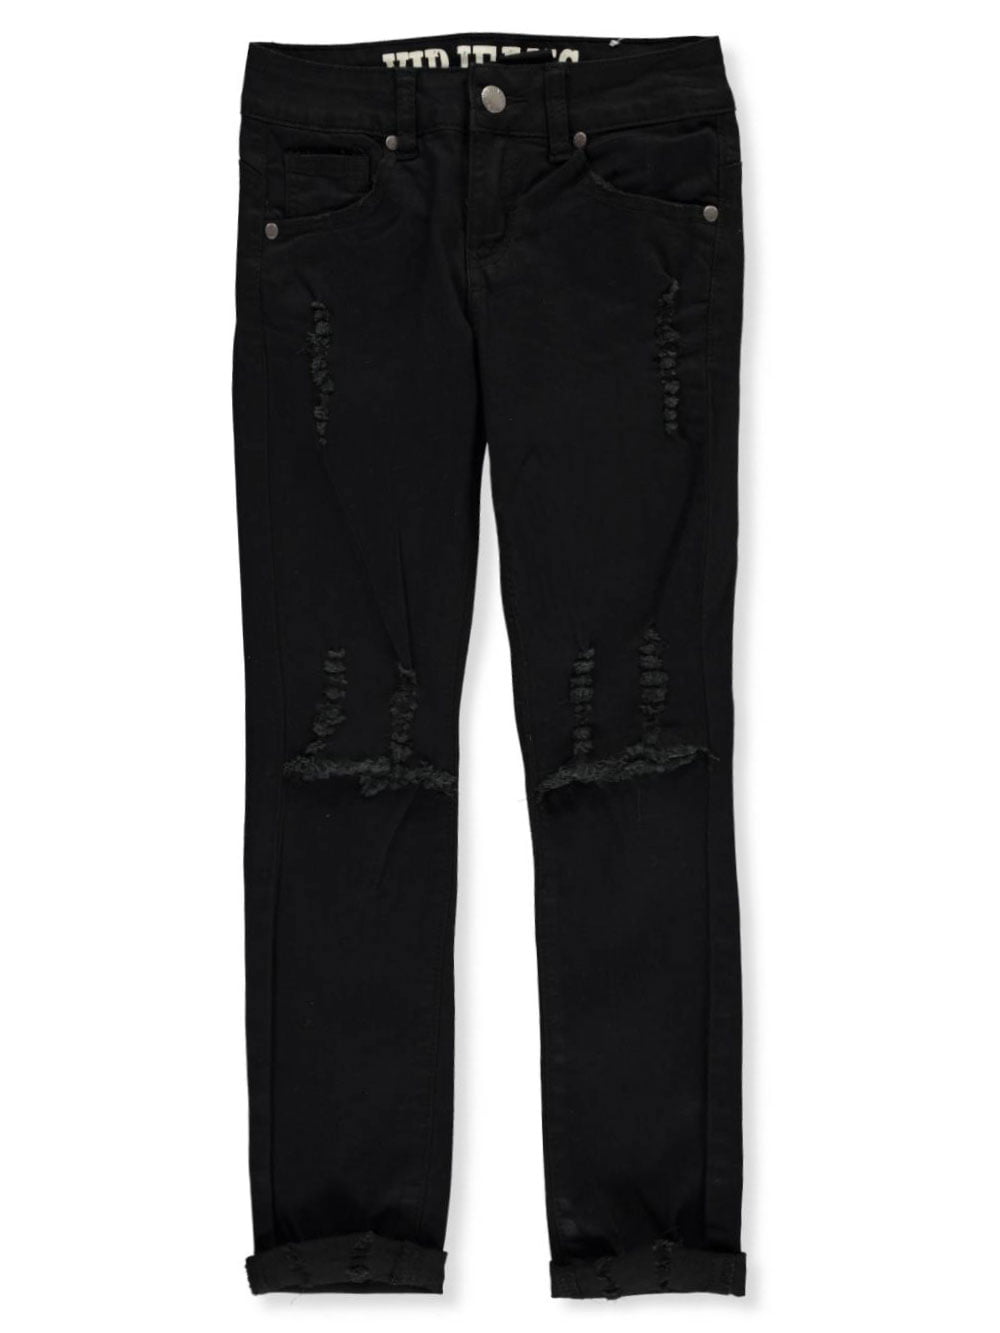 VIP Jeans - VIP Jeans Girls' Slit Knee Jeans - black, 7 - Walmart.com ...